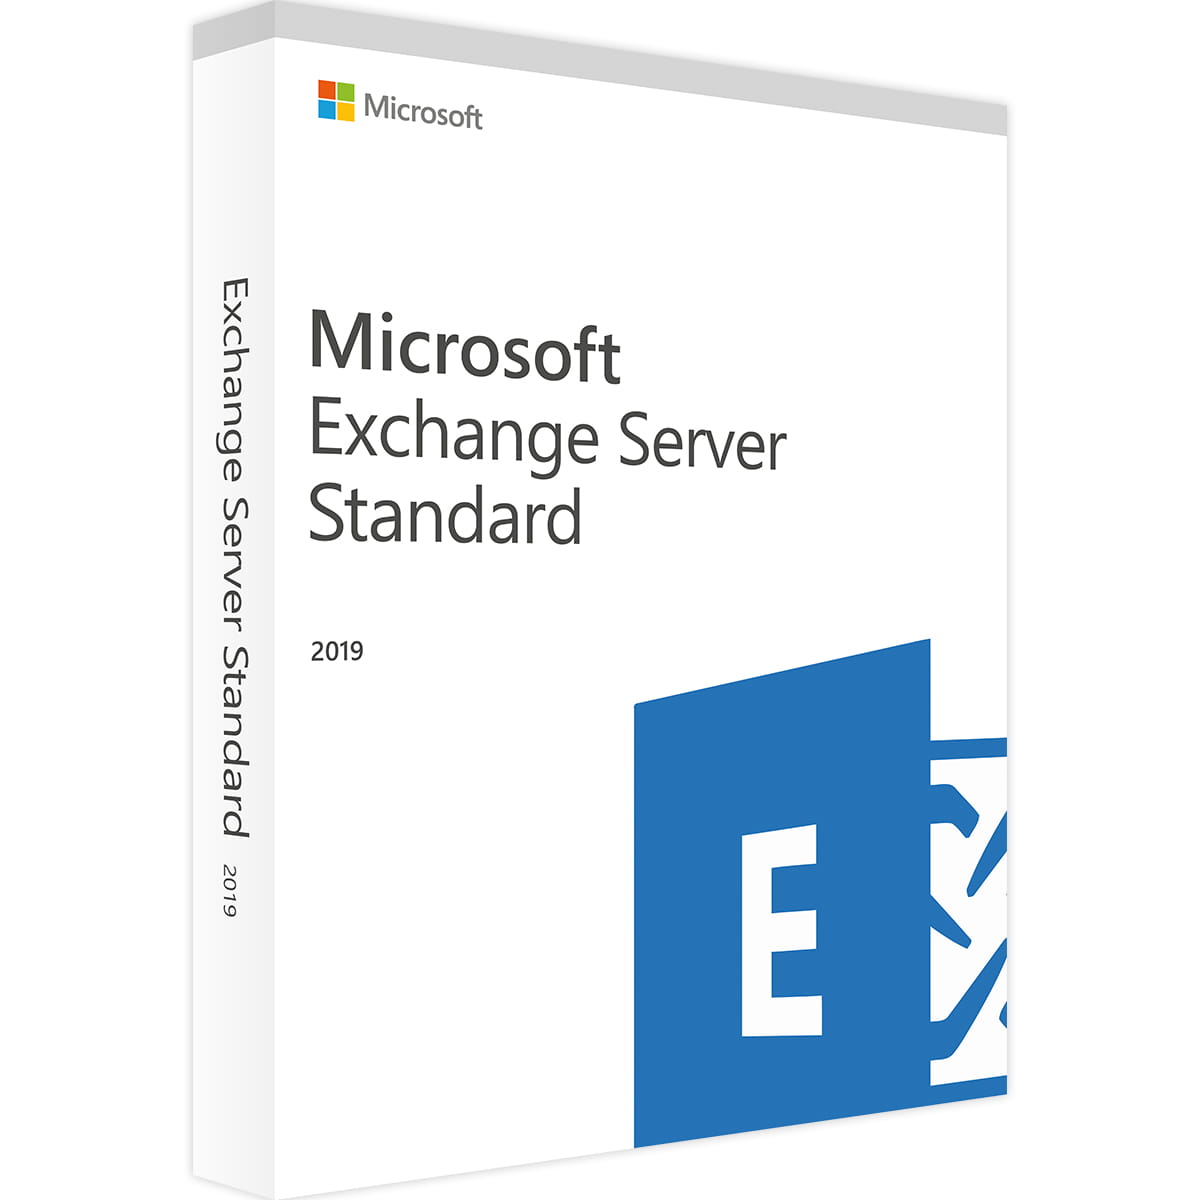 Microsoft Exchange Standard Blitzhandel24 - Buy quality software in the shop